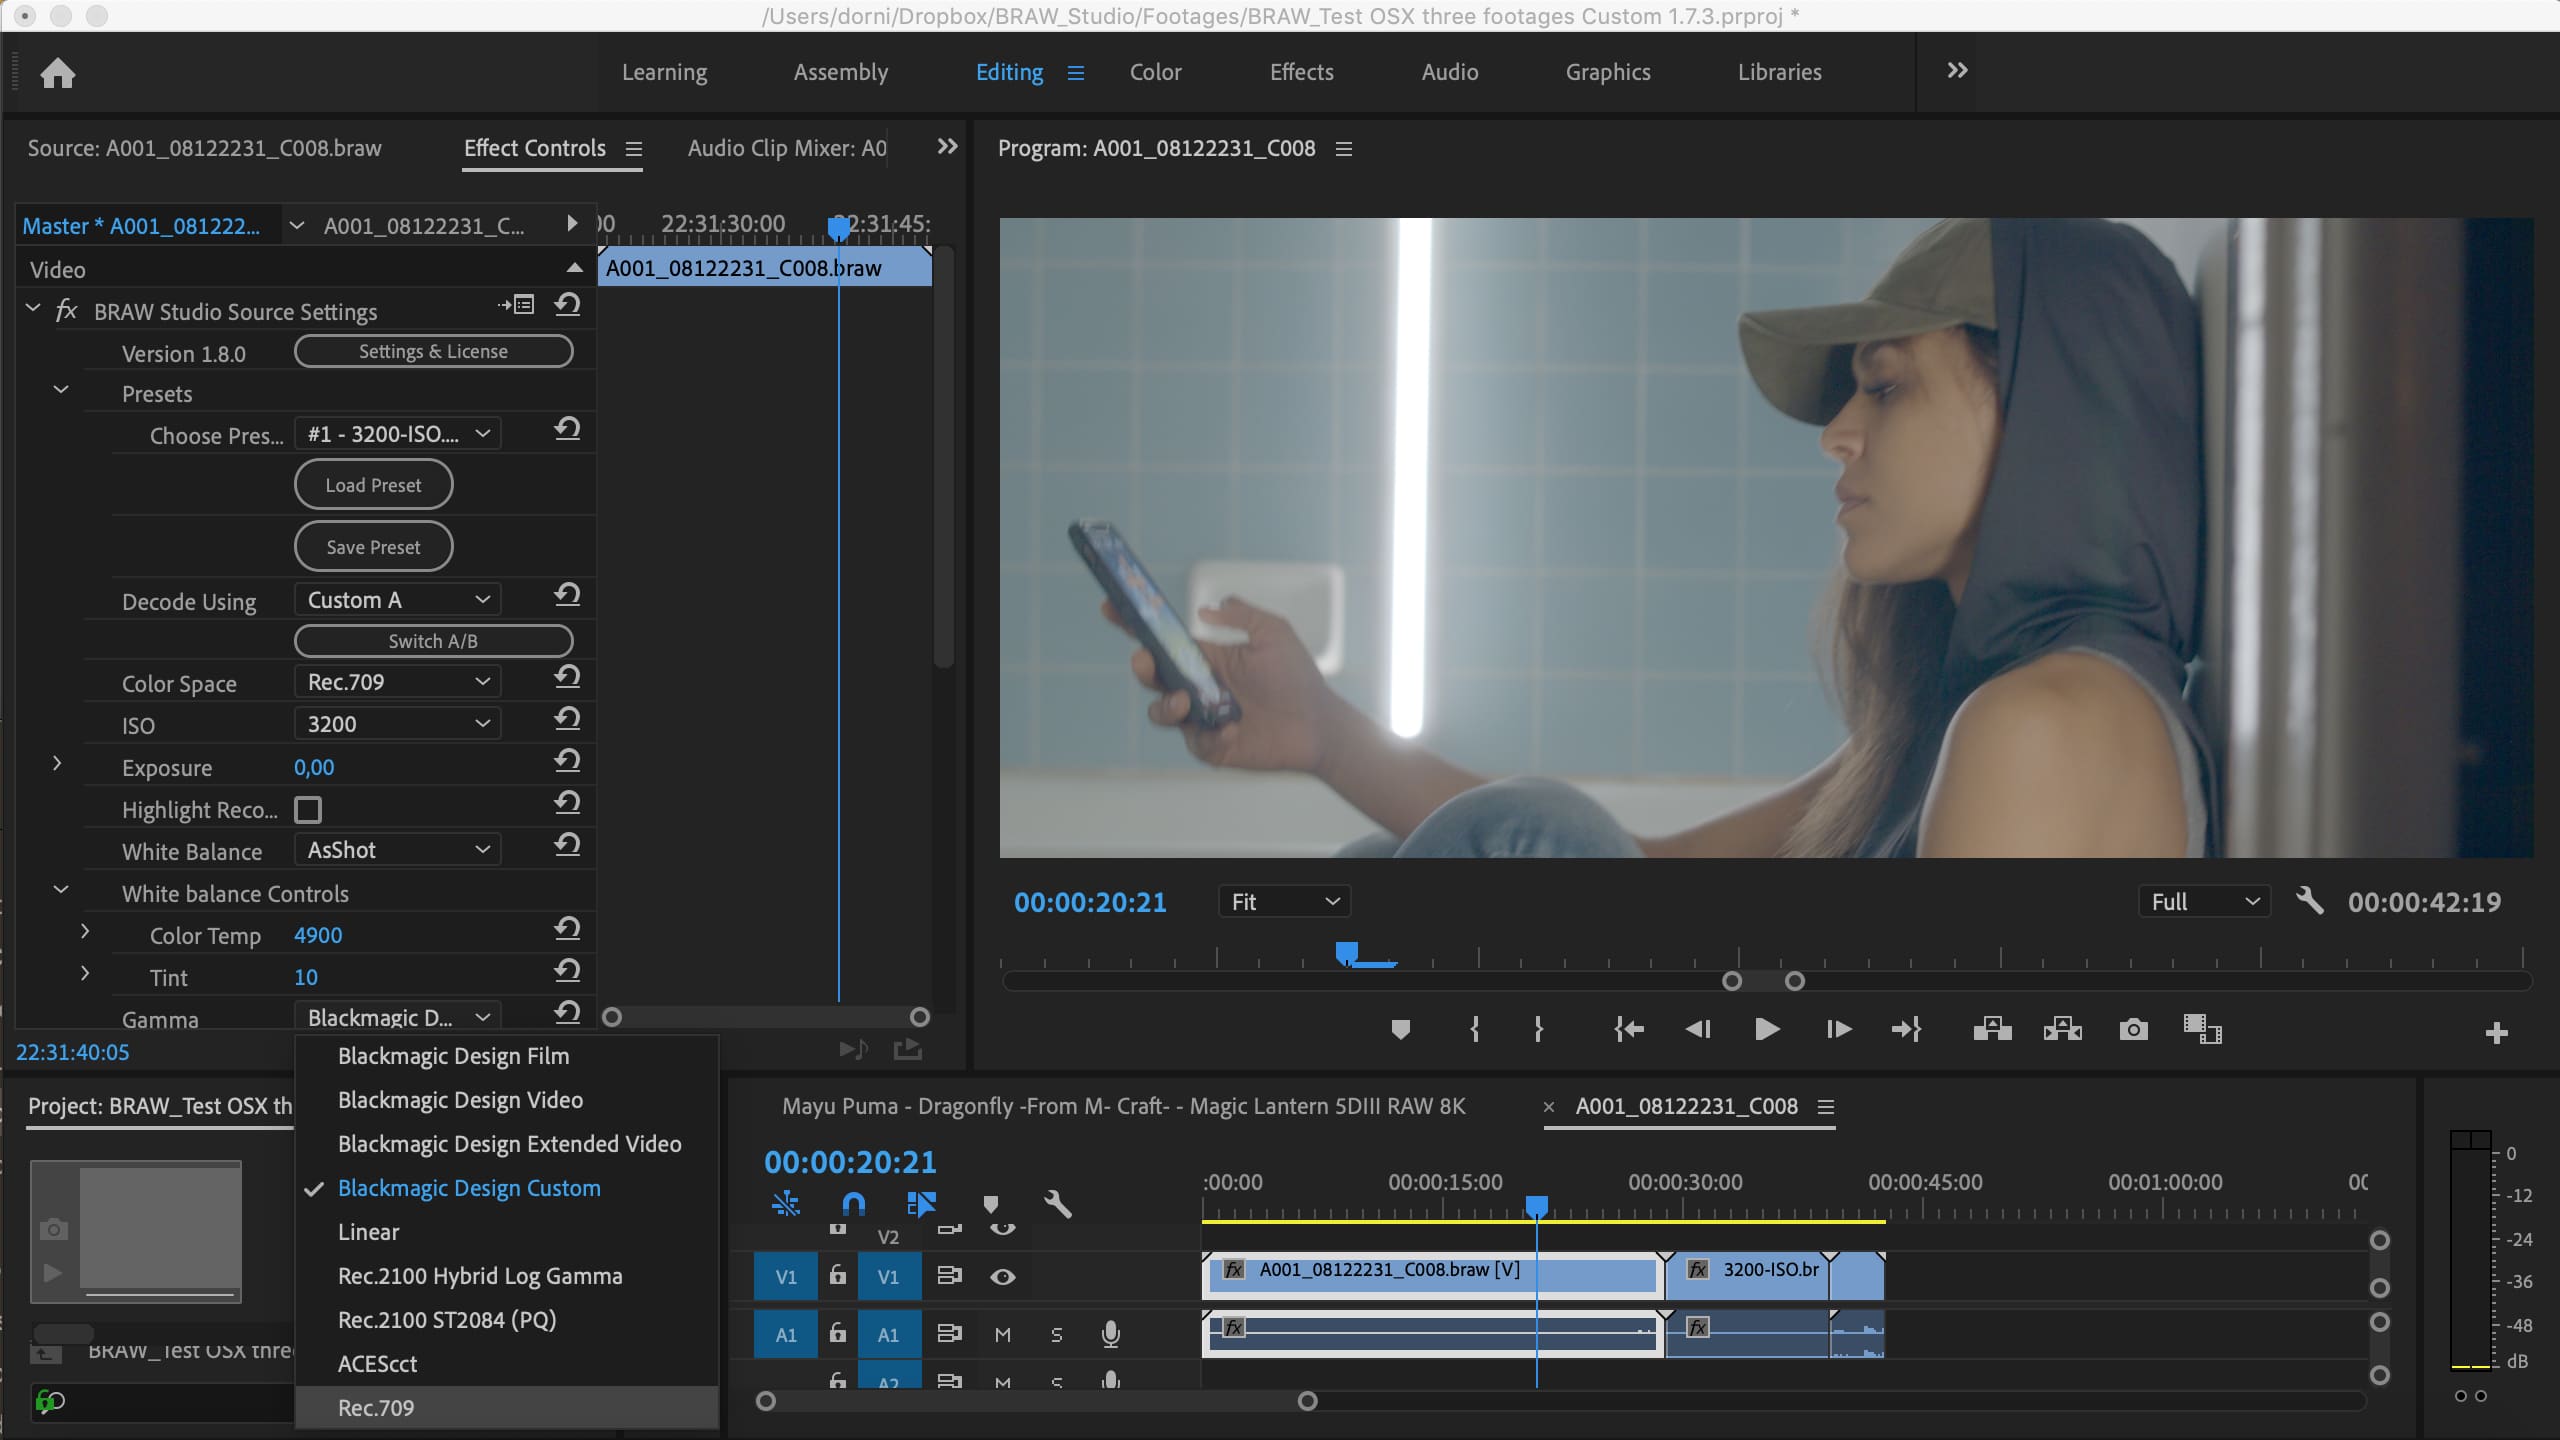 BRAW Studio for Adobe Premiere Pro and Adobe Media Encoder on macOS (Blackmagic RAW importer plugin screenshot)